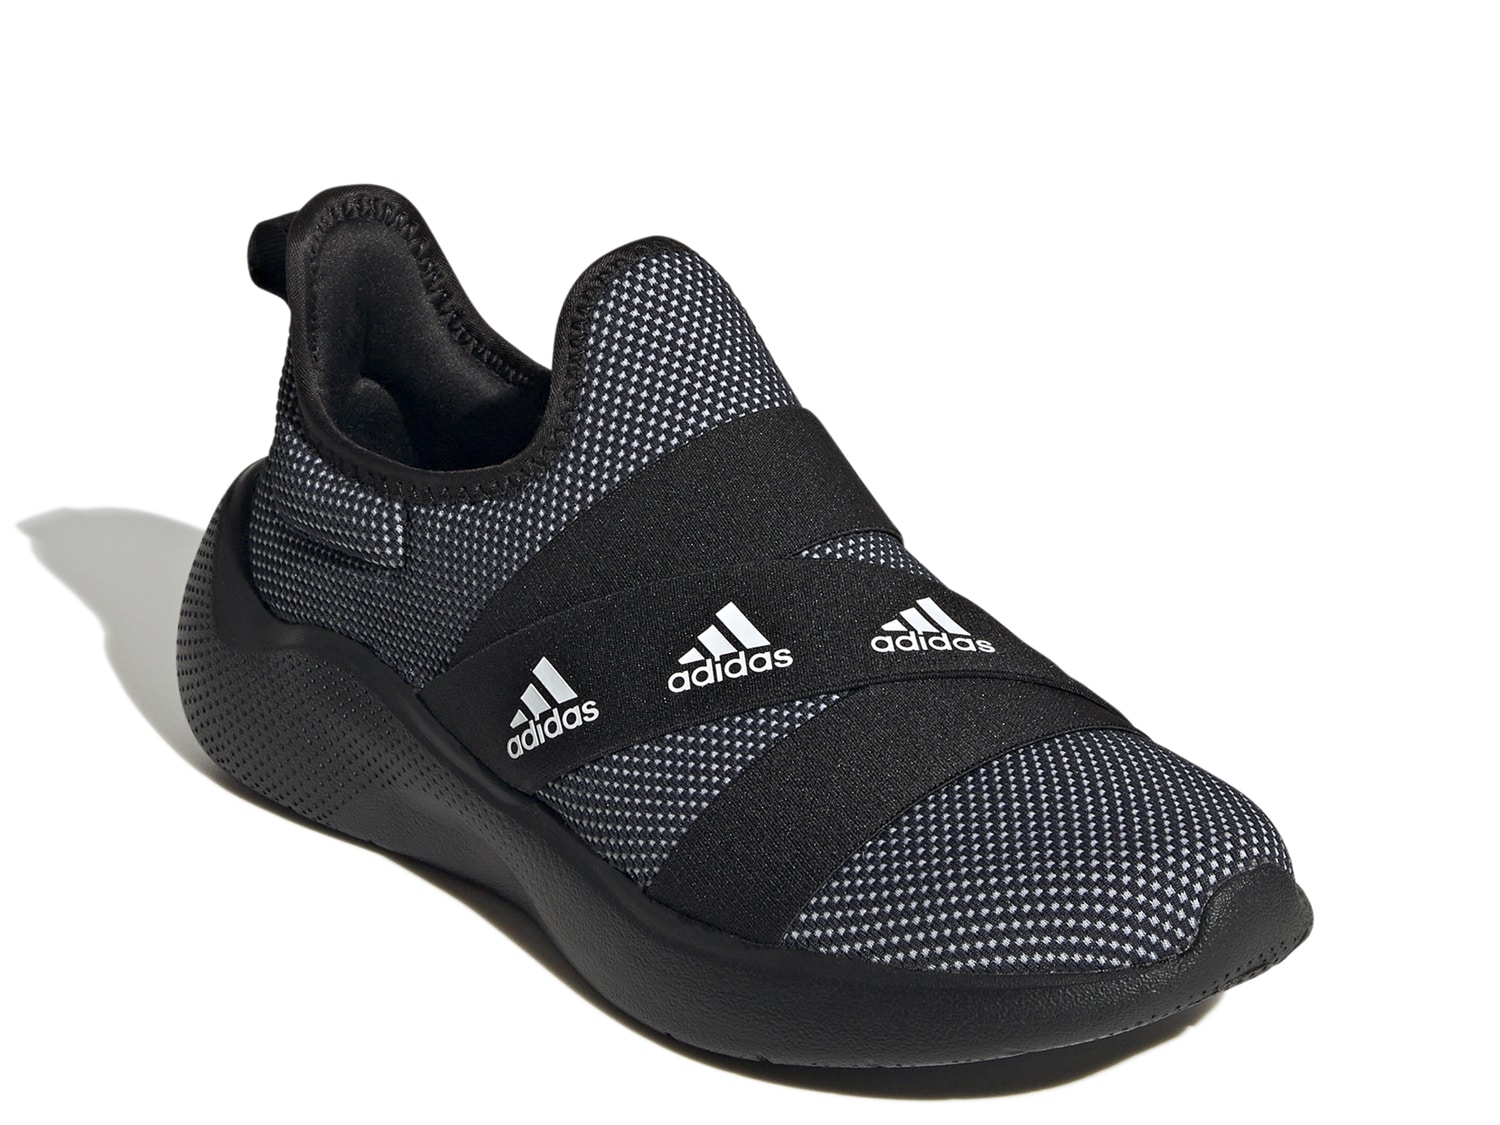 adidas Puremotion Adapt SPW Slip-On Running Shoe - Women's - Free ...